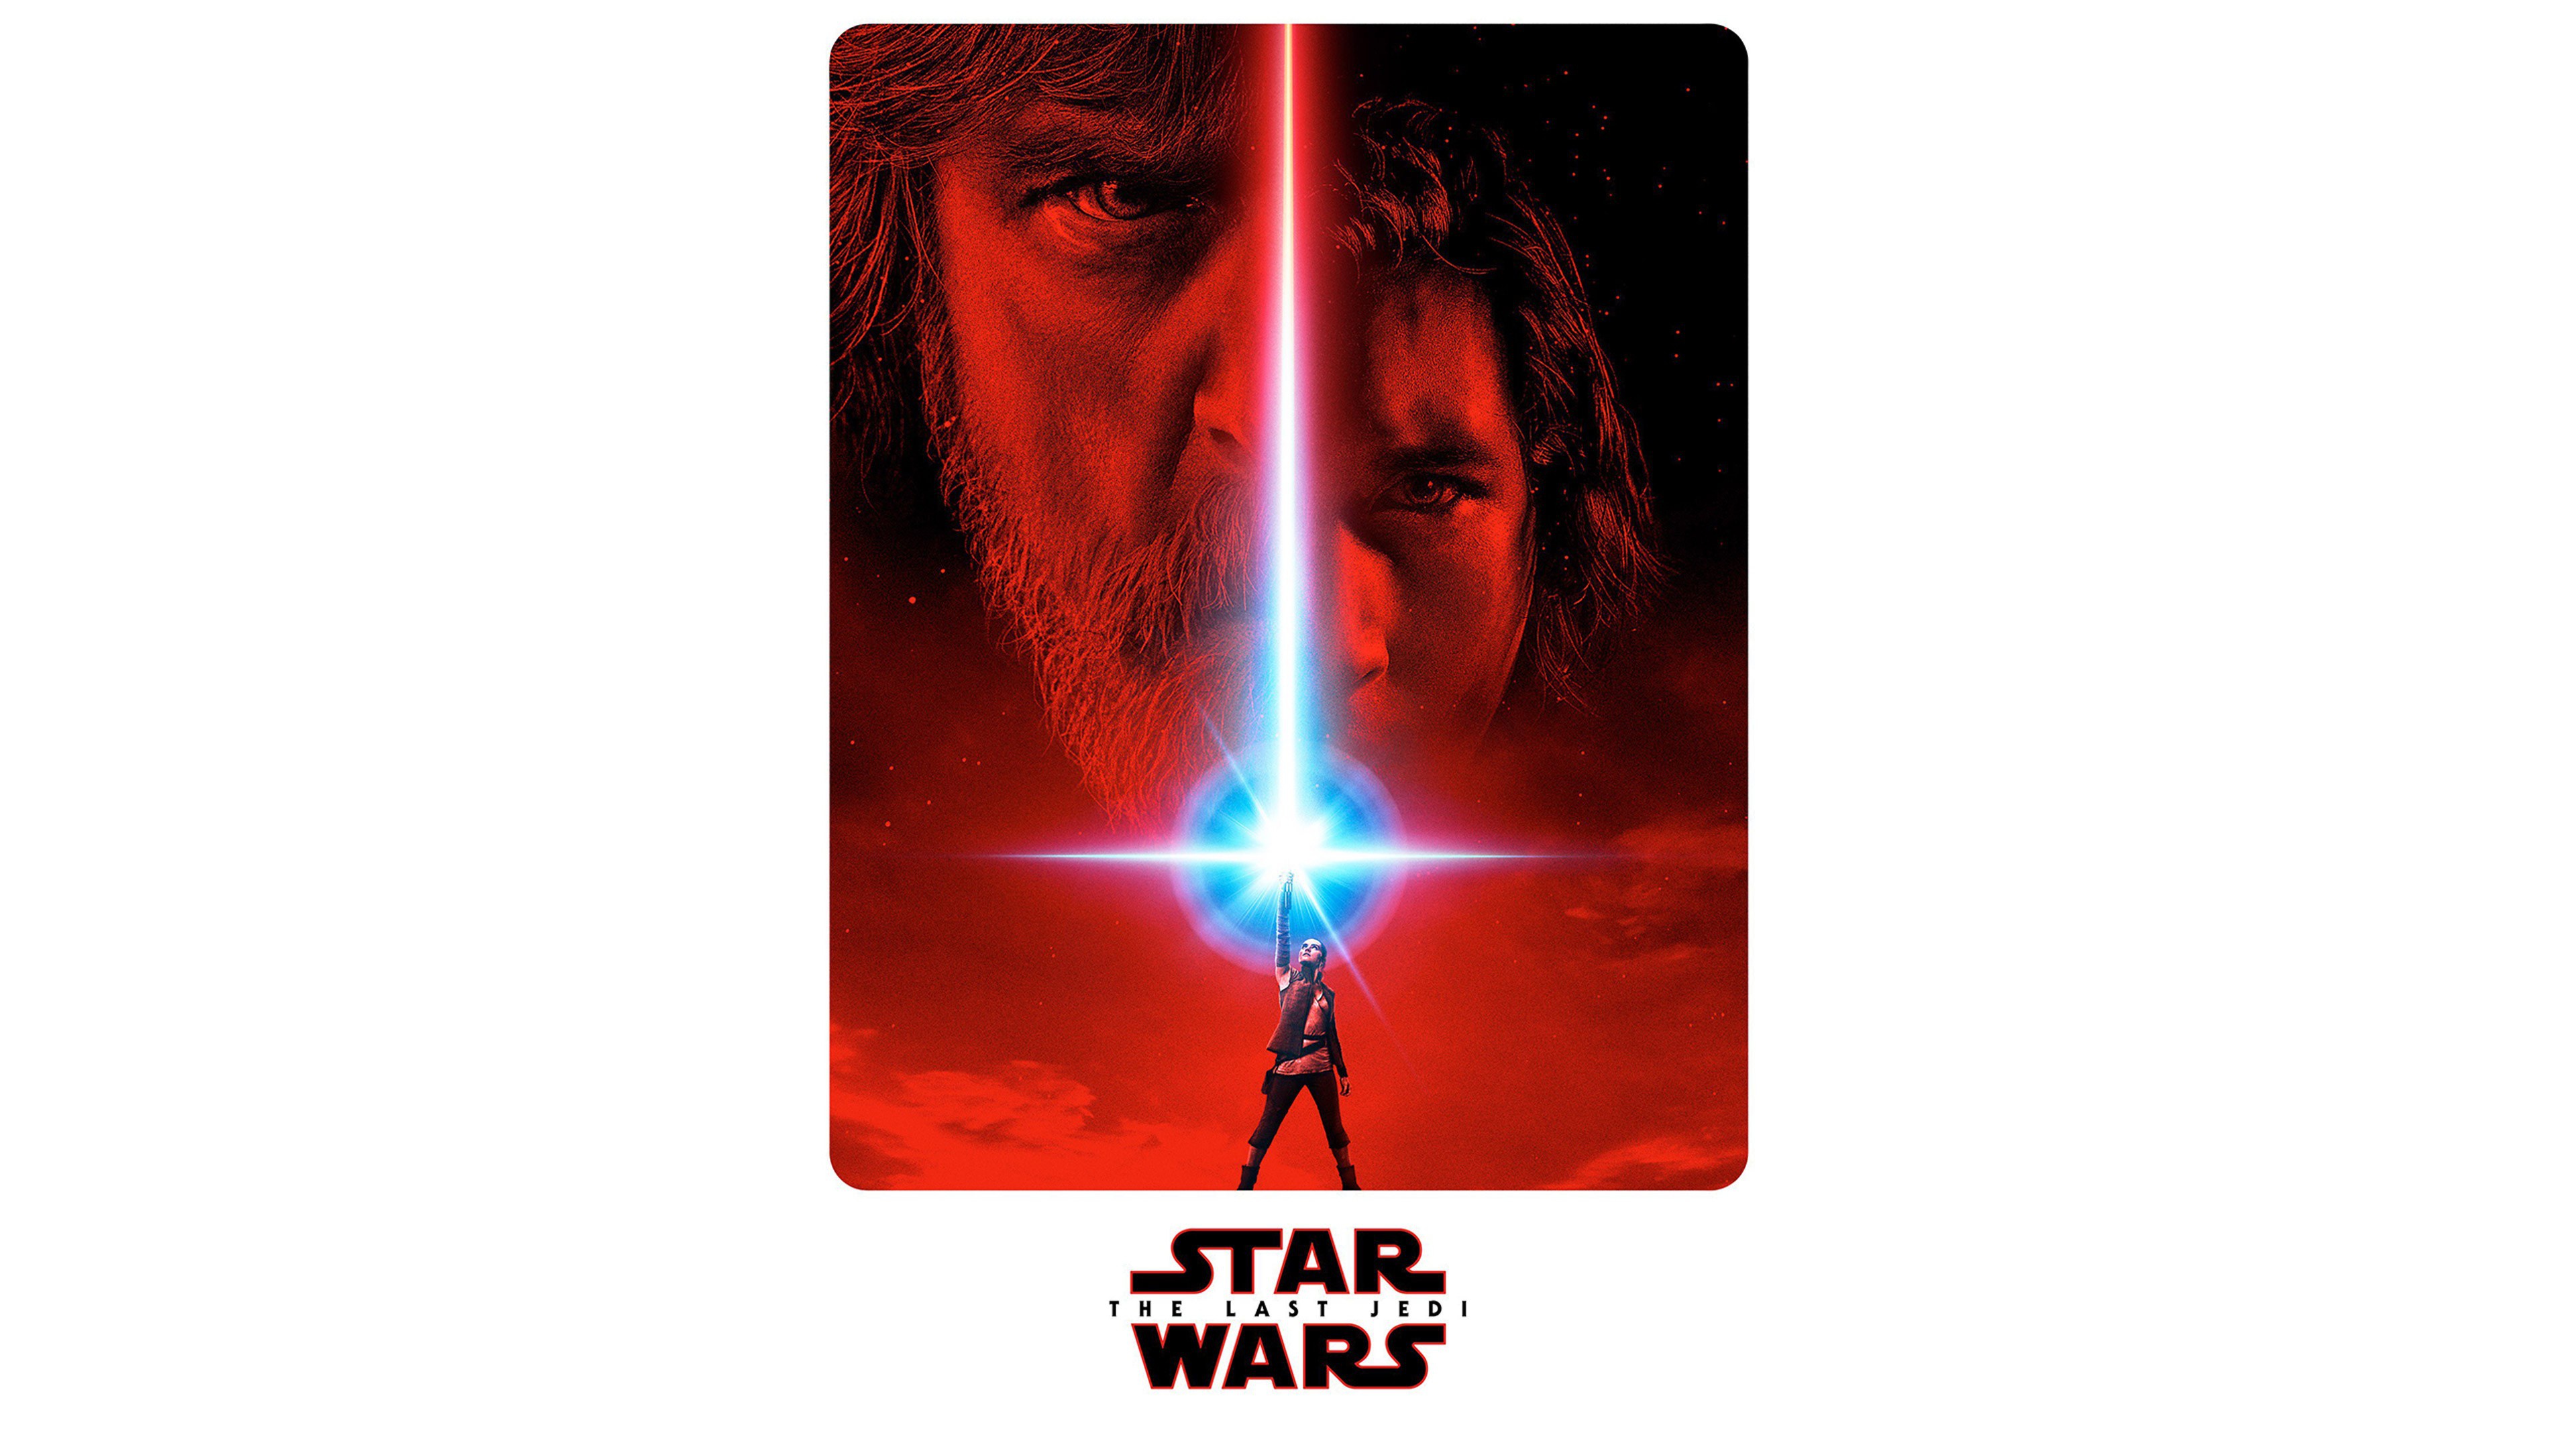 General 3840x2160 Star Wars Star Wars: The Last Jedi Luke Skywalker lightsaber movie poster Star Wars Heroes Star Wars Villains digital art simple background